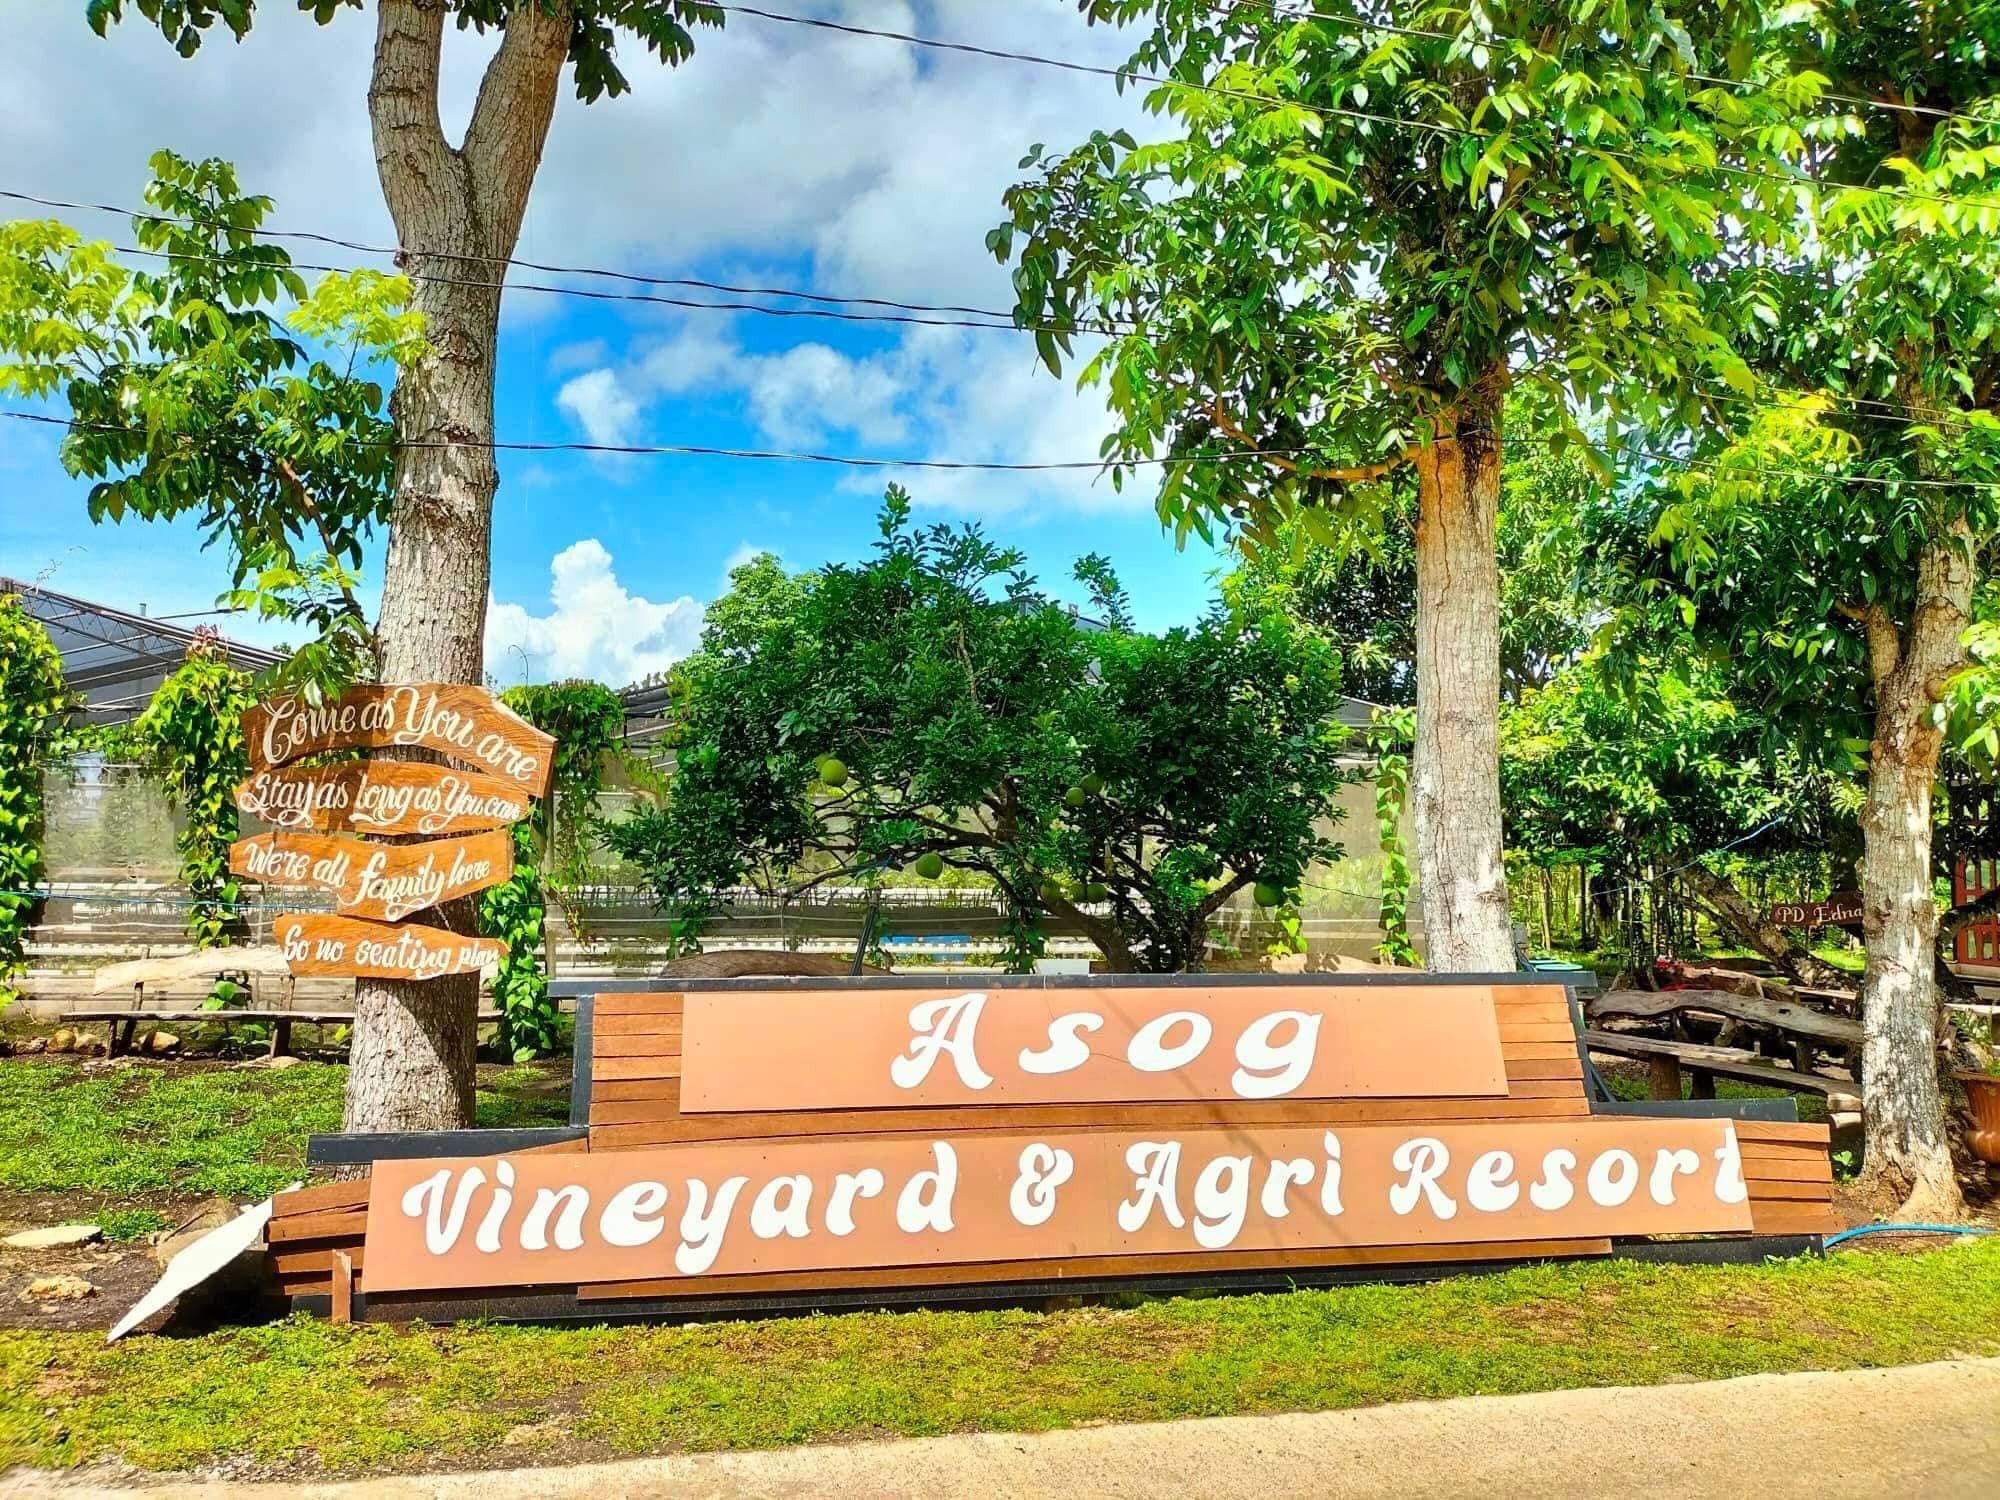 Asog Vineyard & Agri Resort